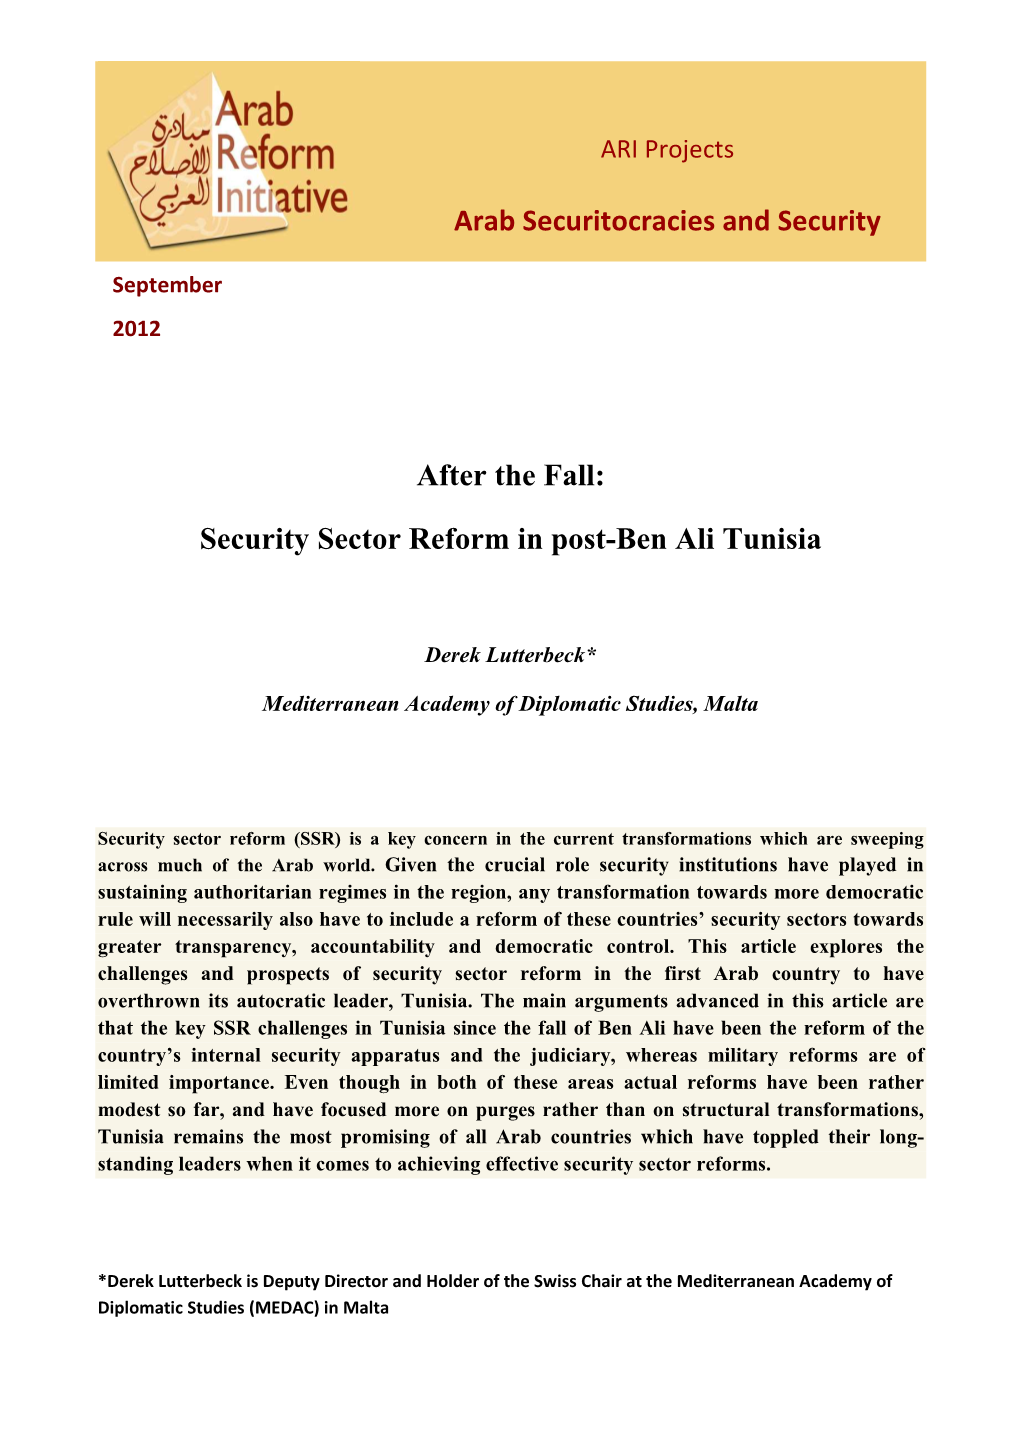 Security Sector Reform in Post-Ben Ali Tunisia